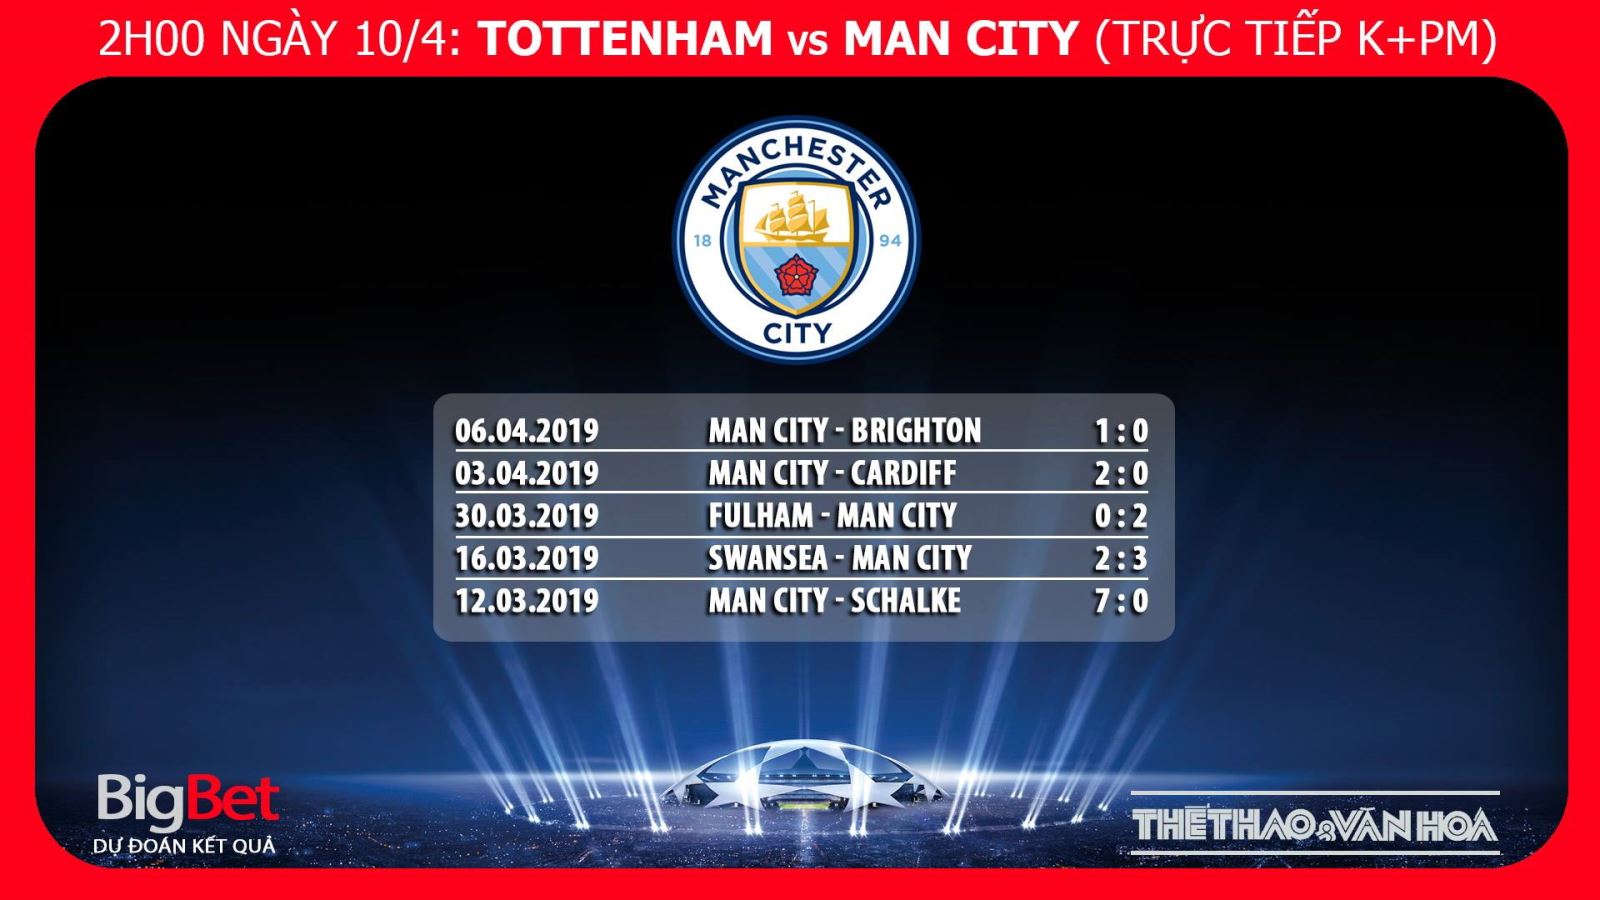 Trực tiếp Tottenham vs Man City, xem trực tiếp Tottenham vs Man City, trực tiếp bóng đá Tottenham vs Man City, truc tiep Tottenham vs Man City, xem truc tiep Tottenham vs Man City o dau?